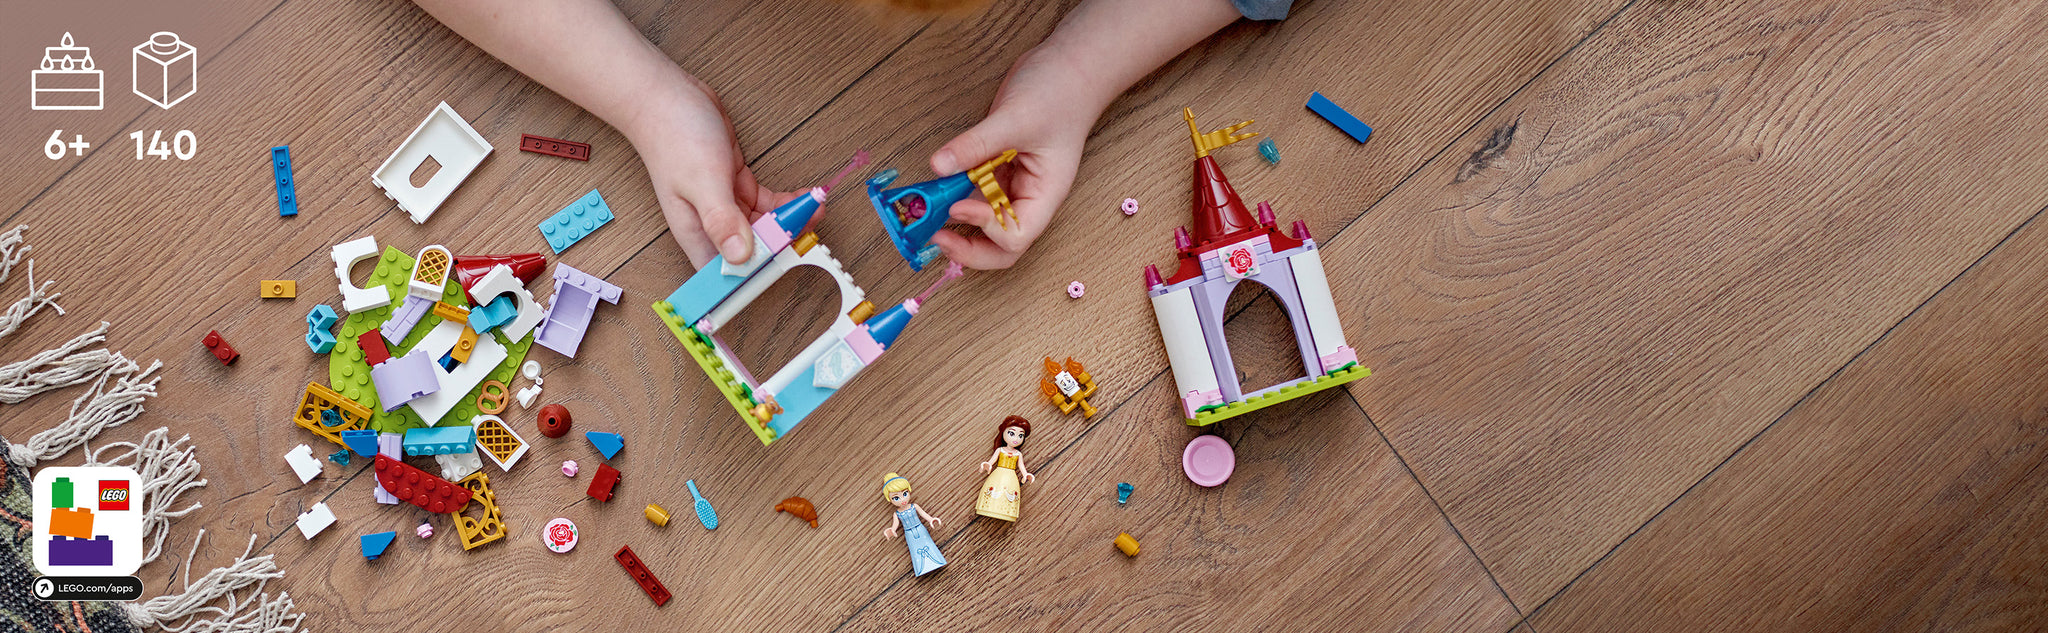 LEGO 43219 Disney Princess creatieve kastelen